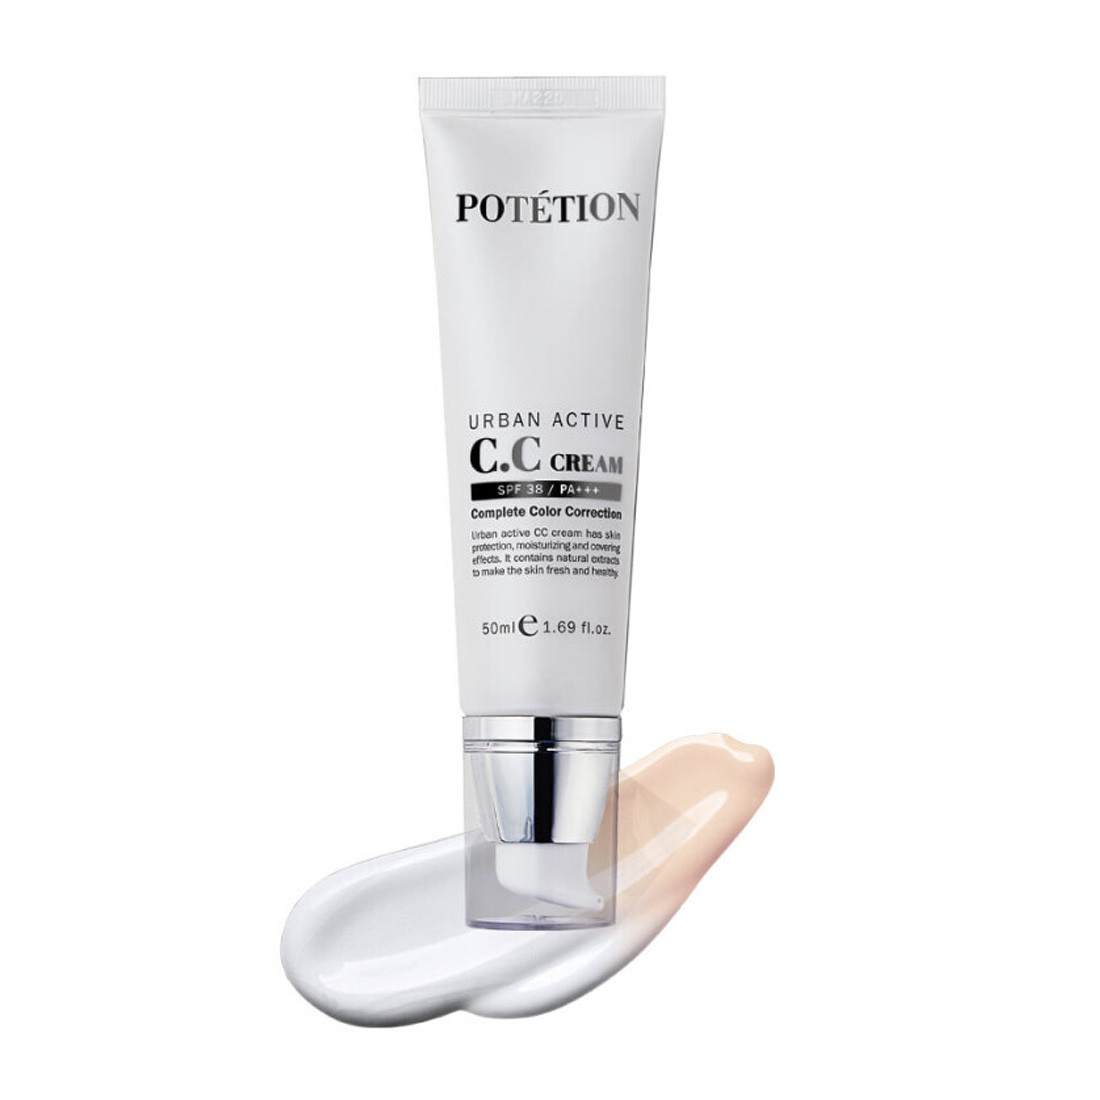 CUSKIN Potetion Urban Active SPF38 PA+++ CC Cream - CC Крем для активной защиты кожи от солнца spf 38+